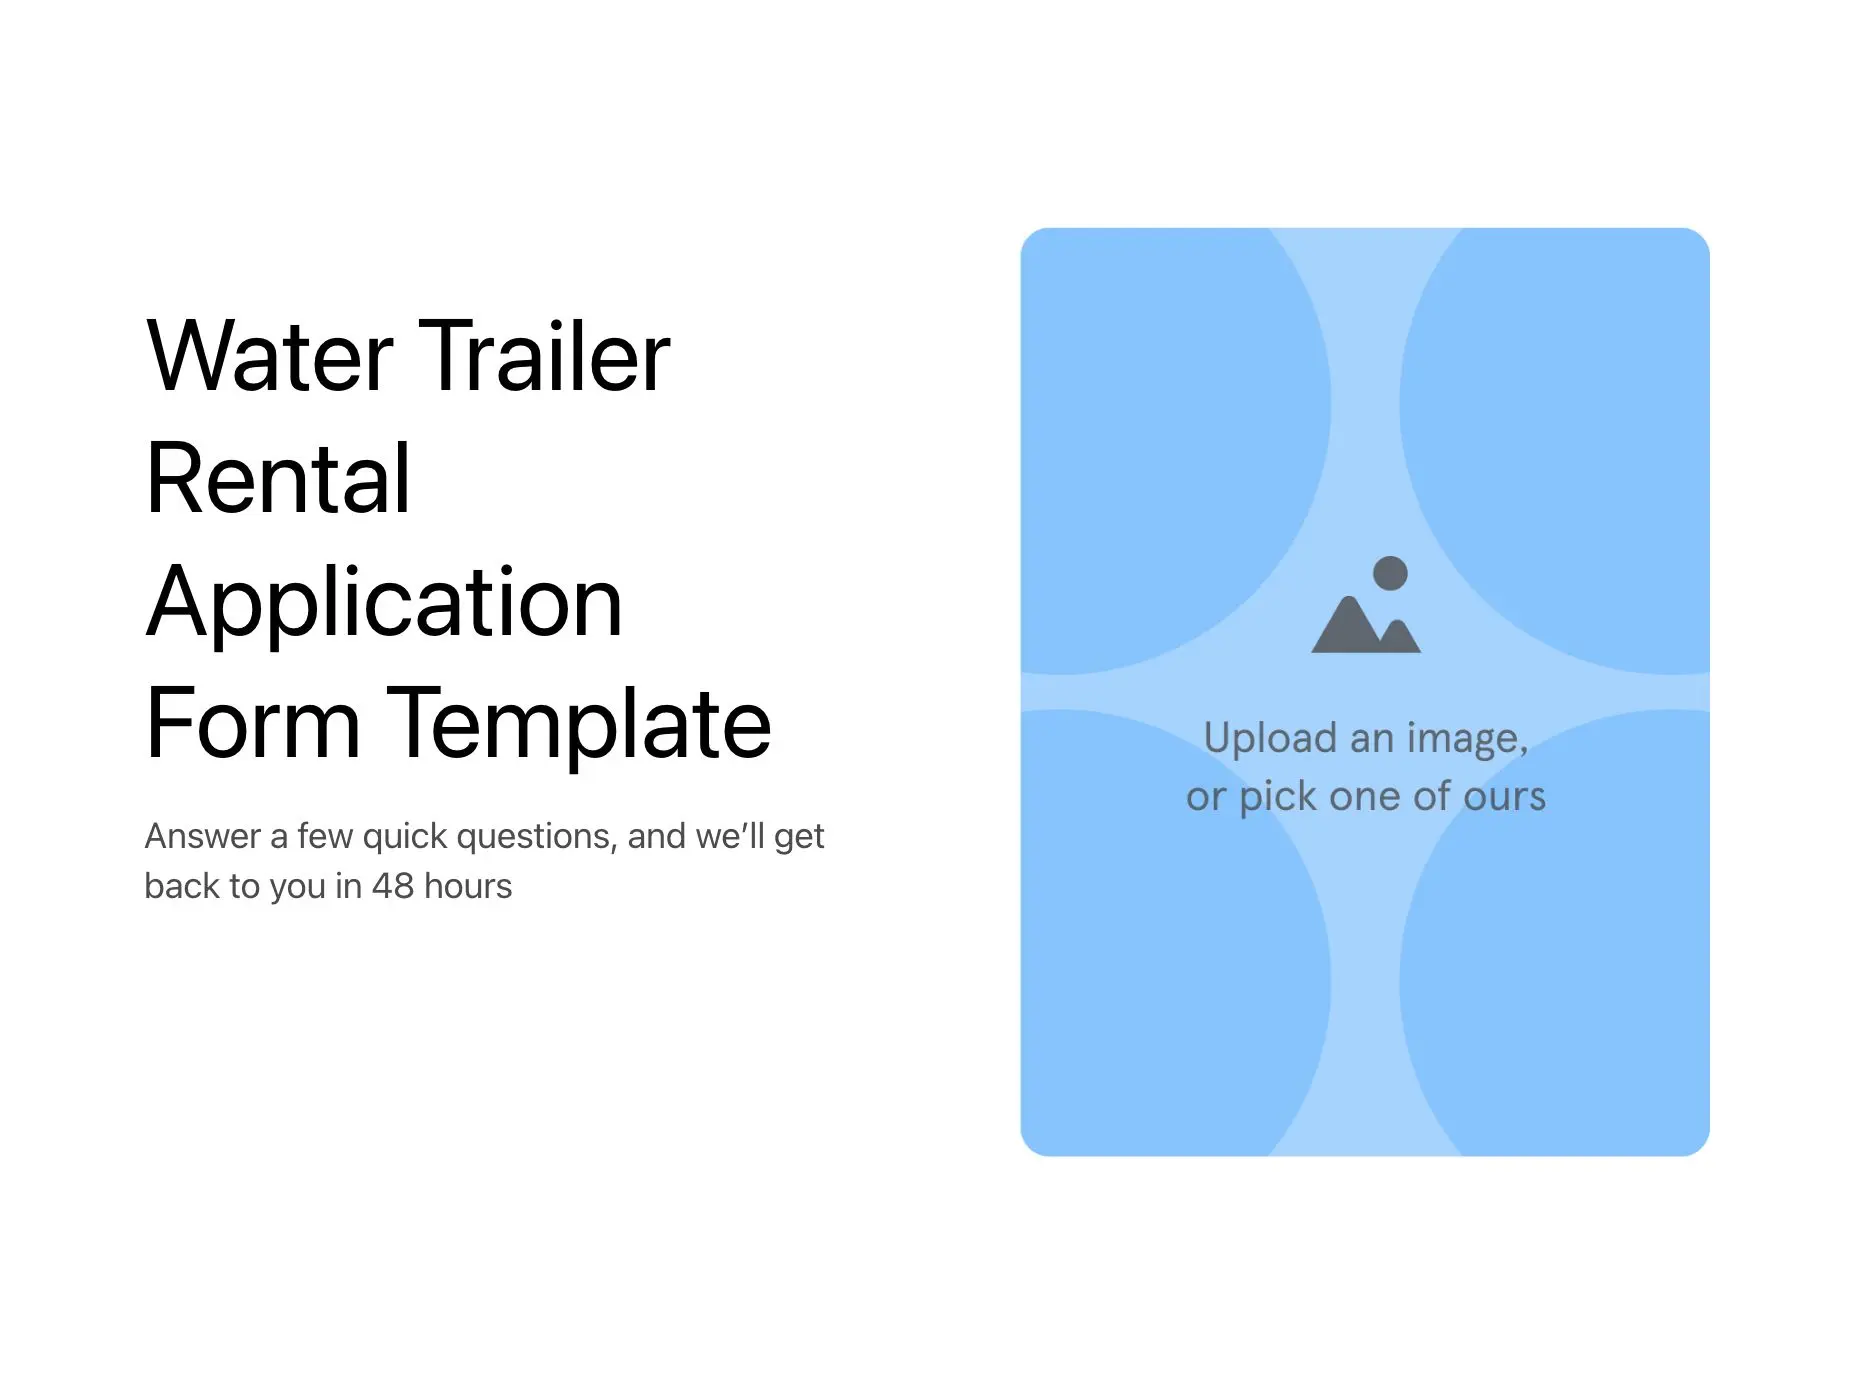 Water Trailer Rental Application Form Template Hero